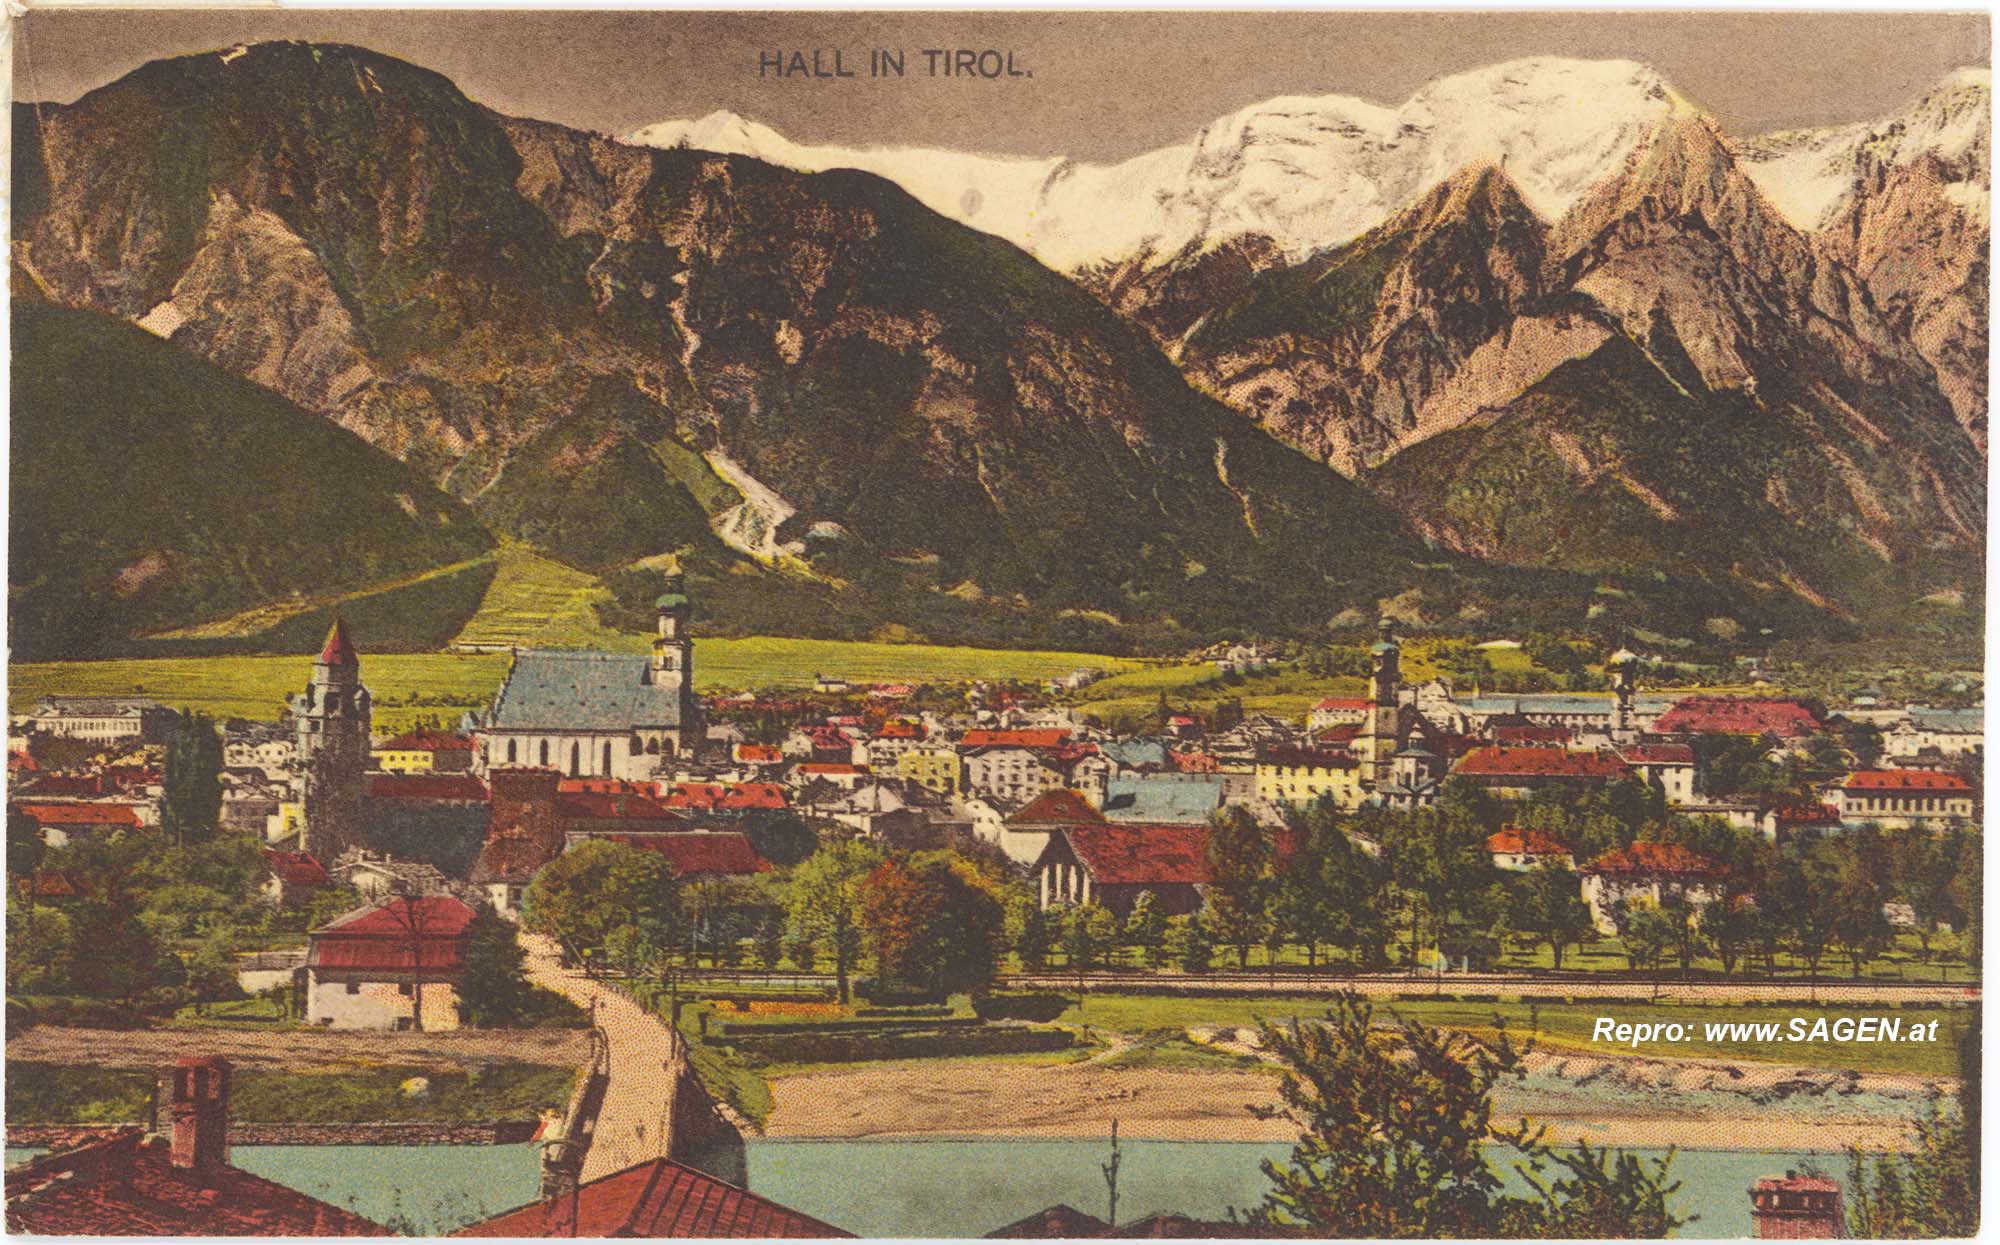 Hall in Tirol 1924